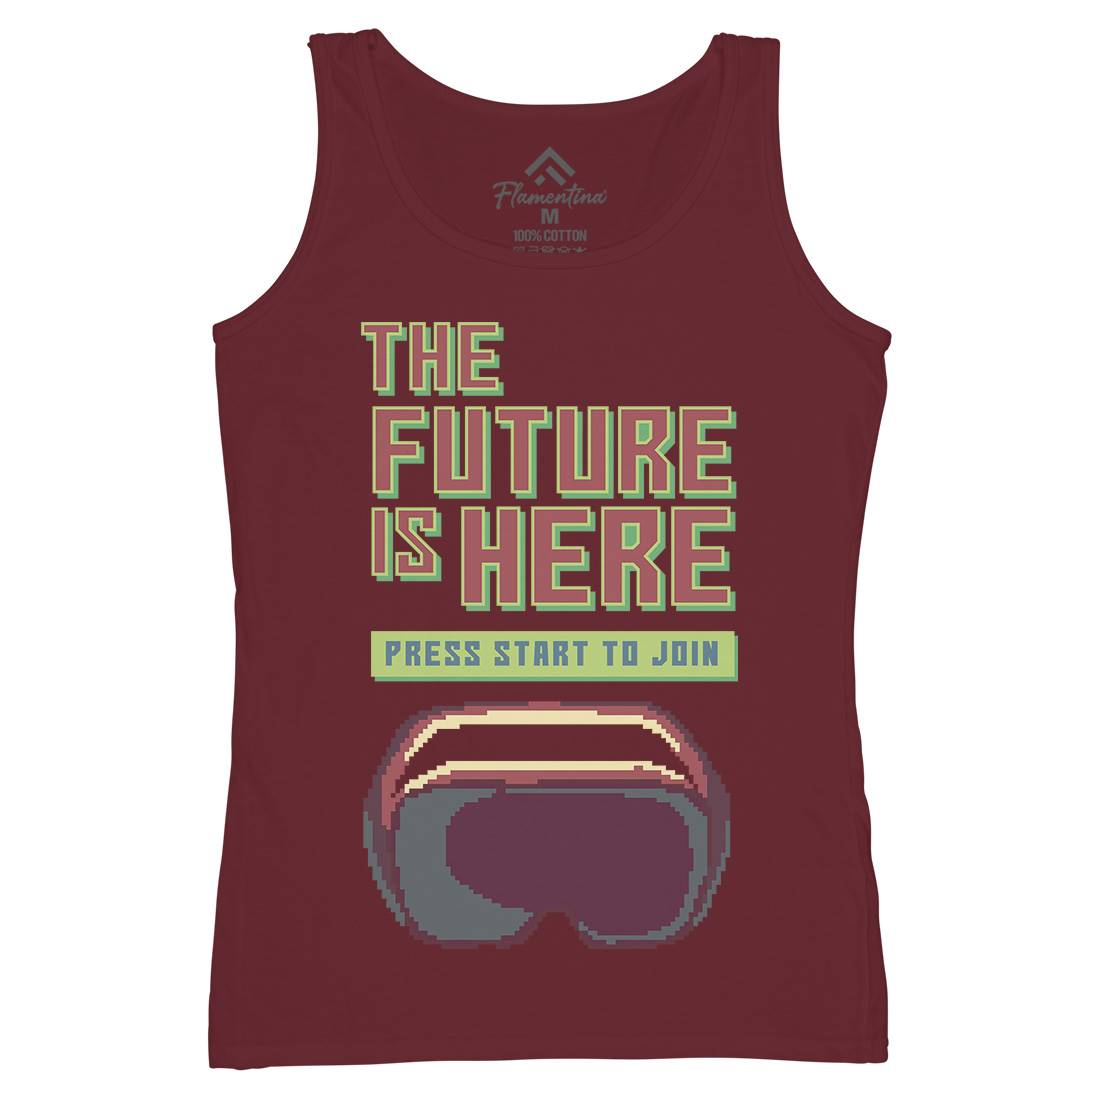 The Future Is Here Womens Organic Tank Top Vest Geek B967